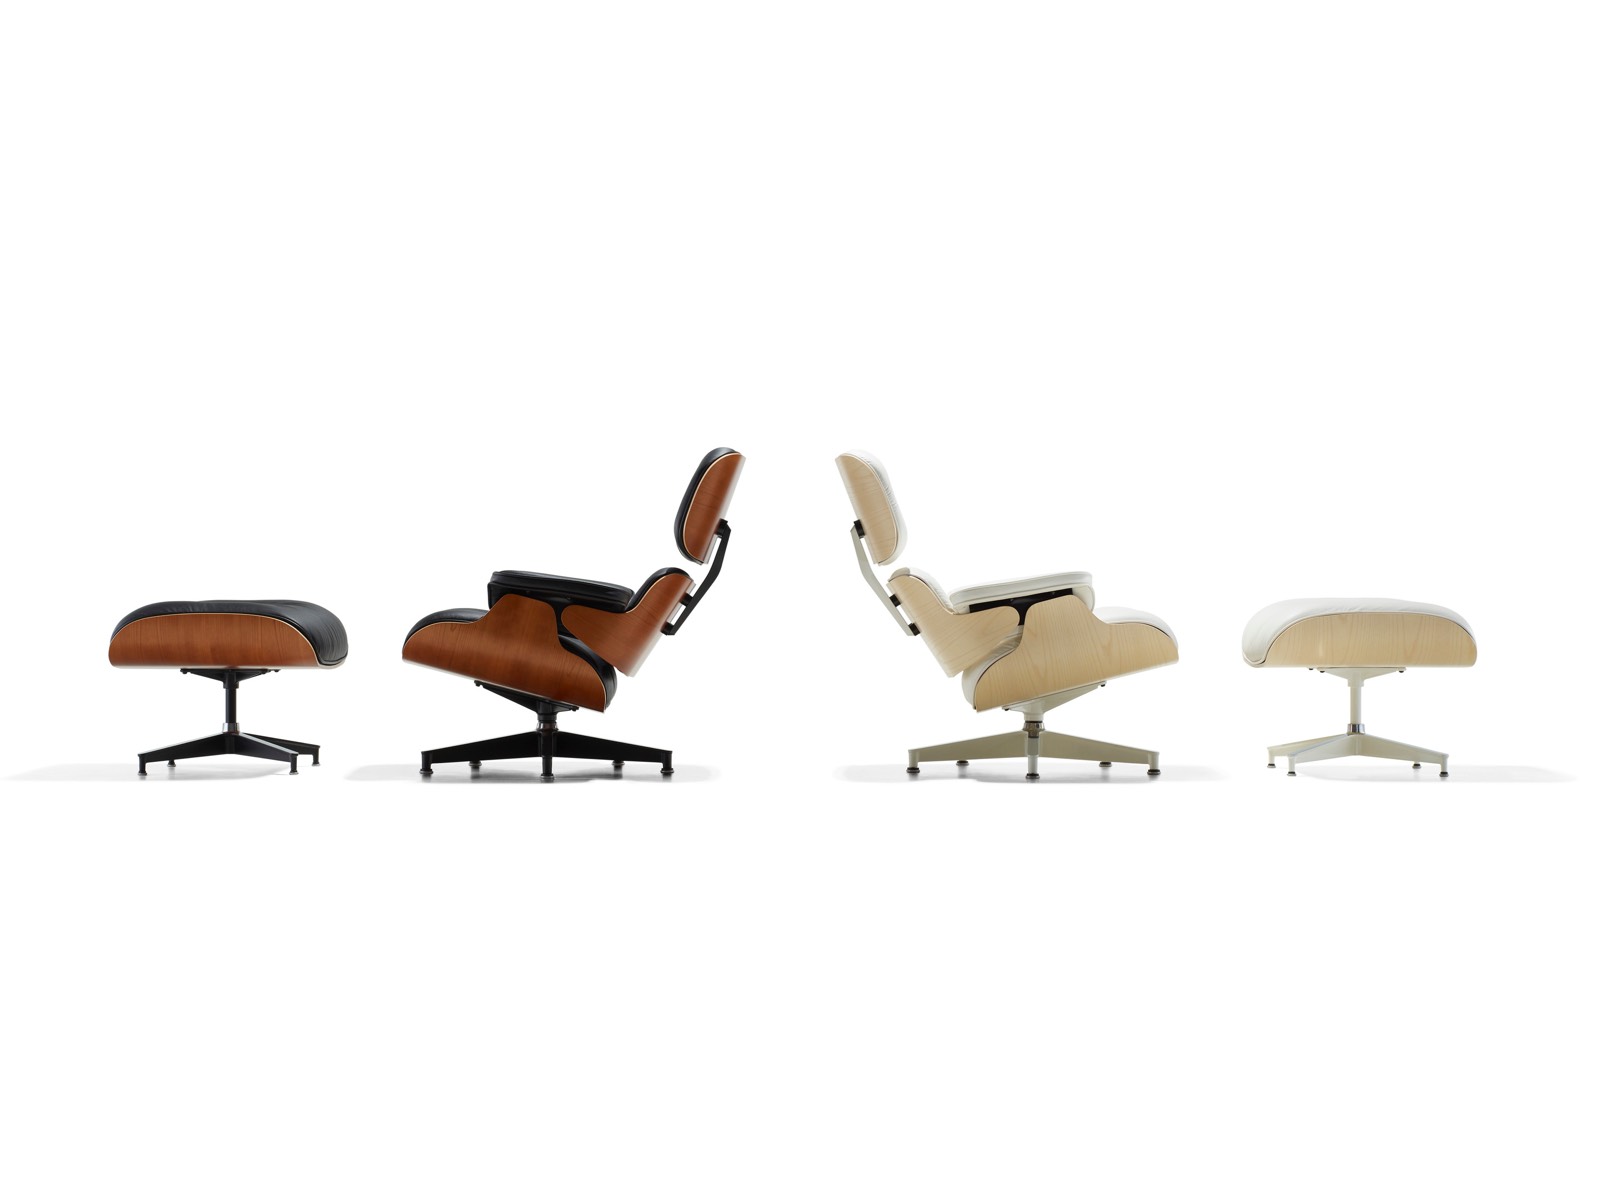 Um couro preto Eames Lounge Chair e Otomano e um couro branco Eames Lounge Chair e Otomano, posicionado de costas.